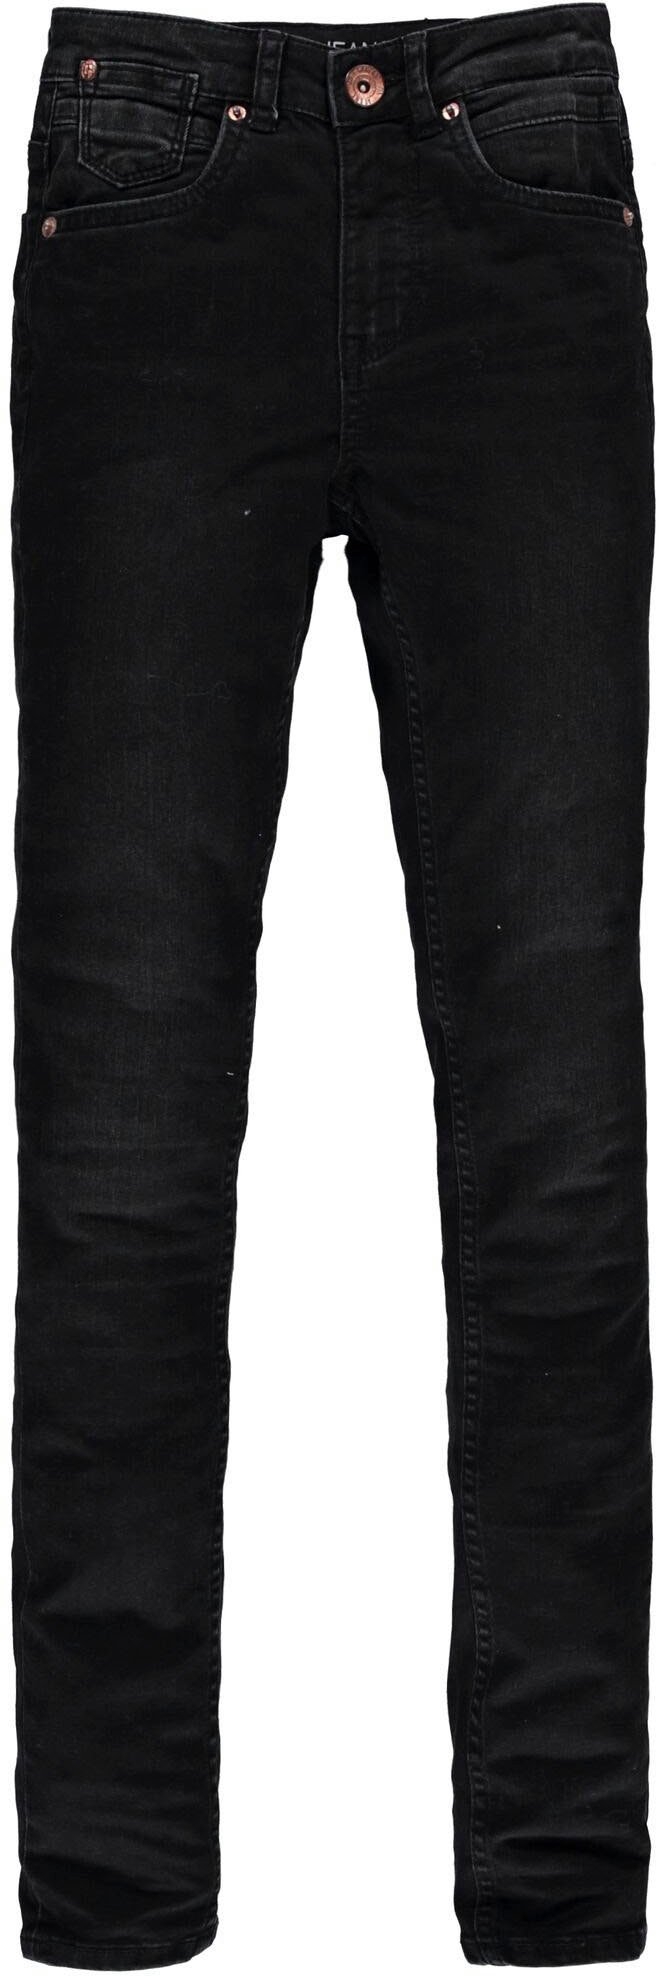 Garcia Stretch jeans 570 RIANNA SUPERSLIM? Bestel nu bij | OTTO